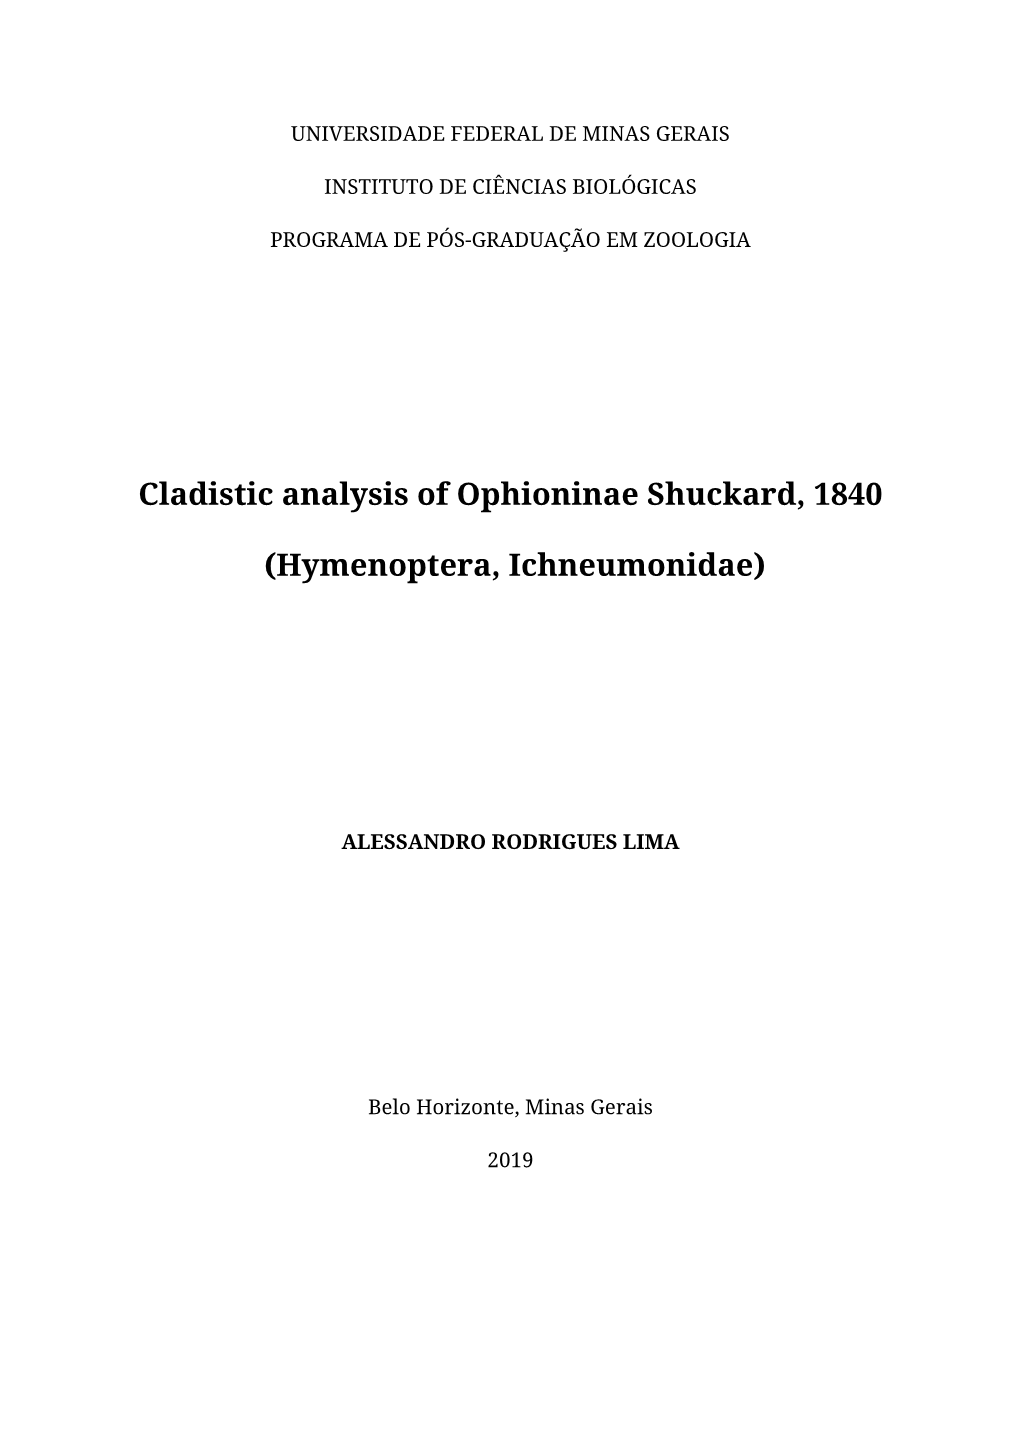 Cladistic Analysis of Ophioninae Shuckard, 1840 (Hymenoptera, Ichneumonidae) [Manuscrito] / Alessandro Rodrigues Lima